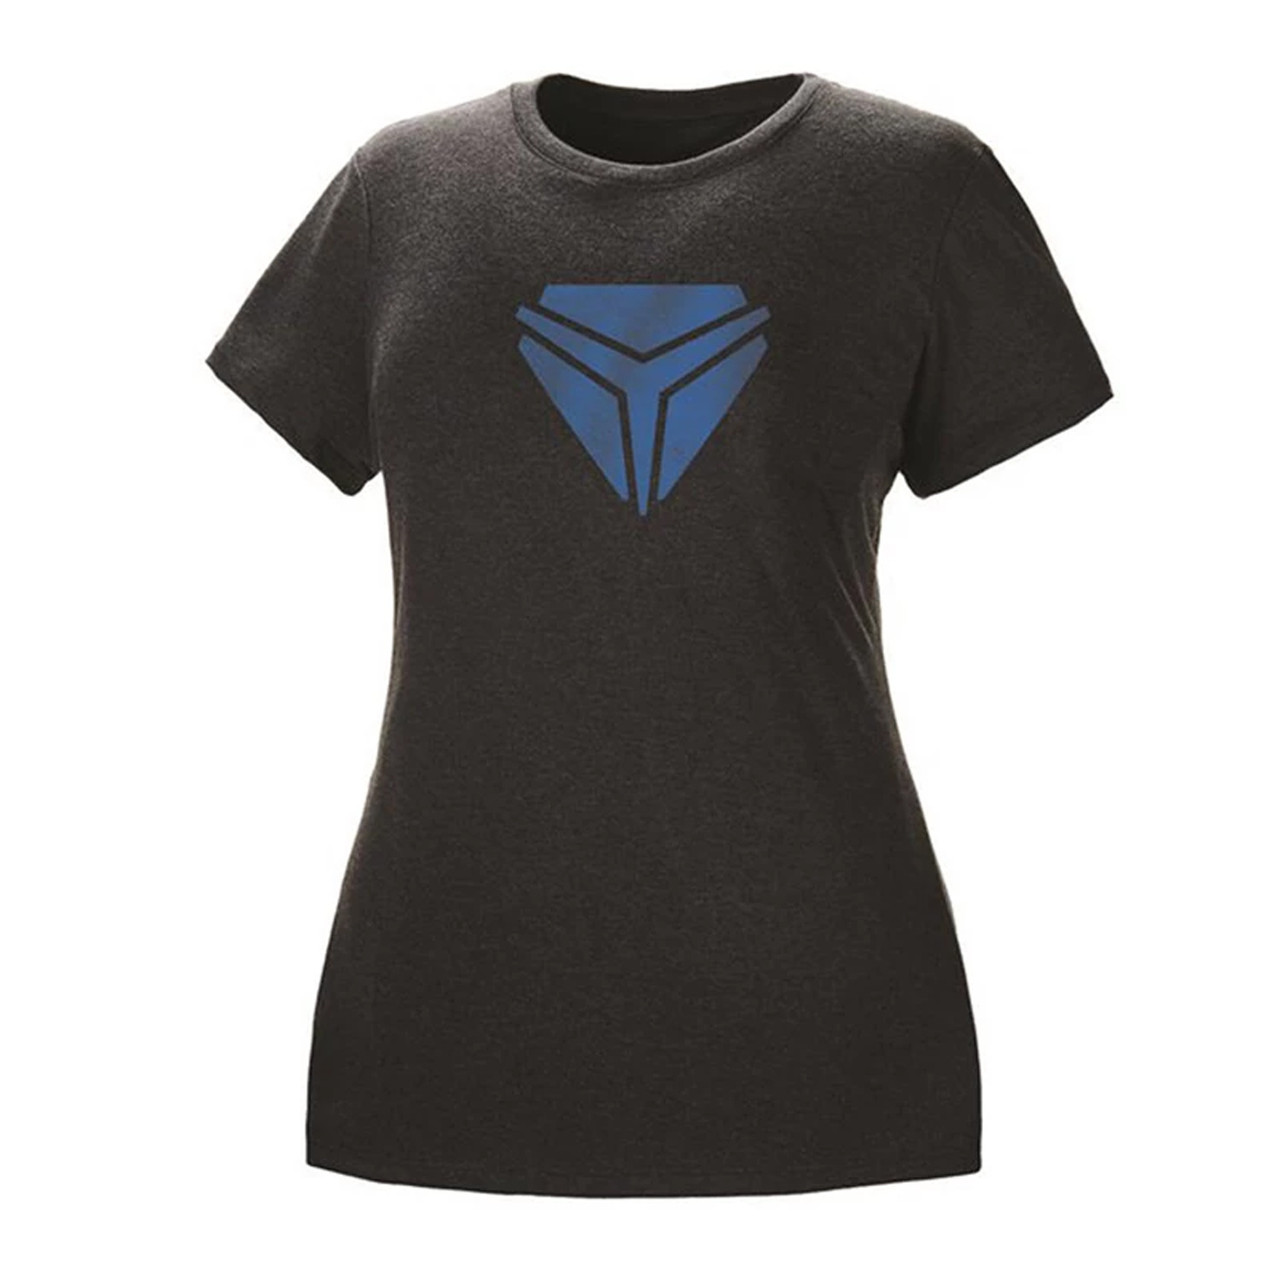 Polaris New OEM Women’s Vintage Graphic T-Shirt with Slingshot Shield, 286791406